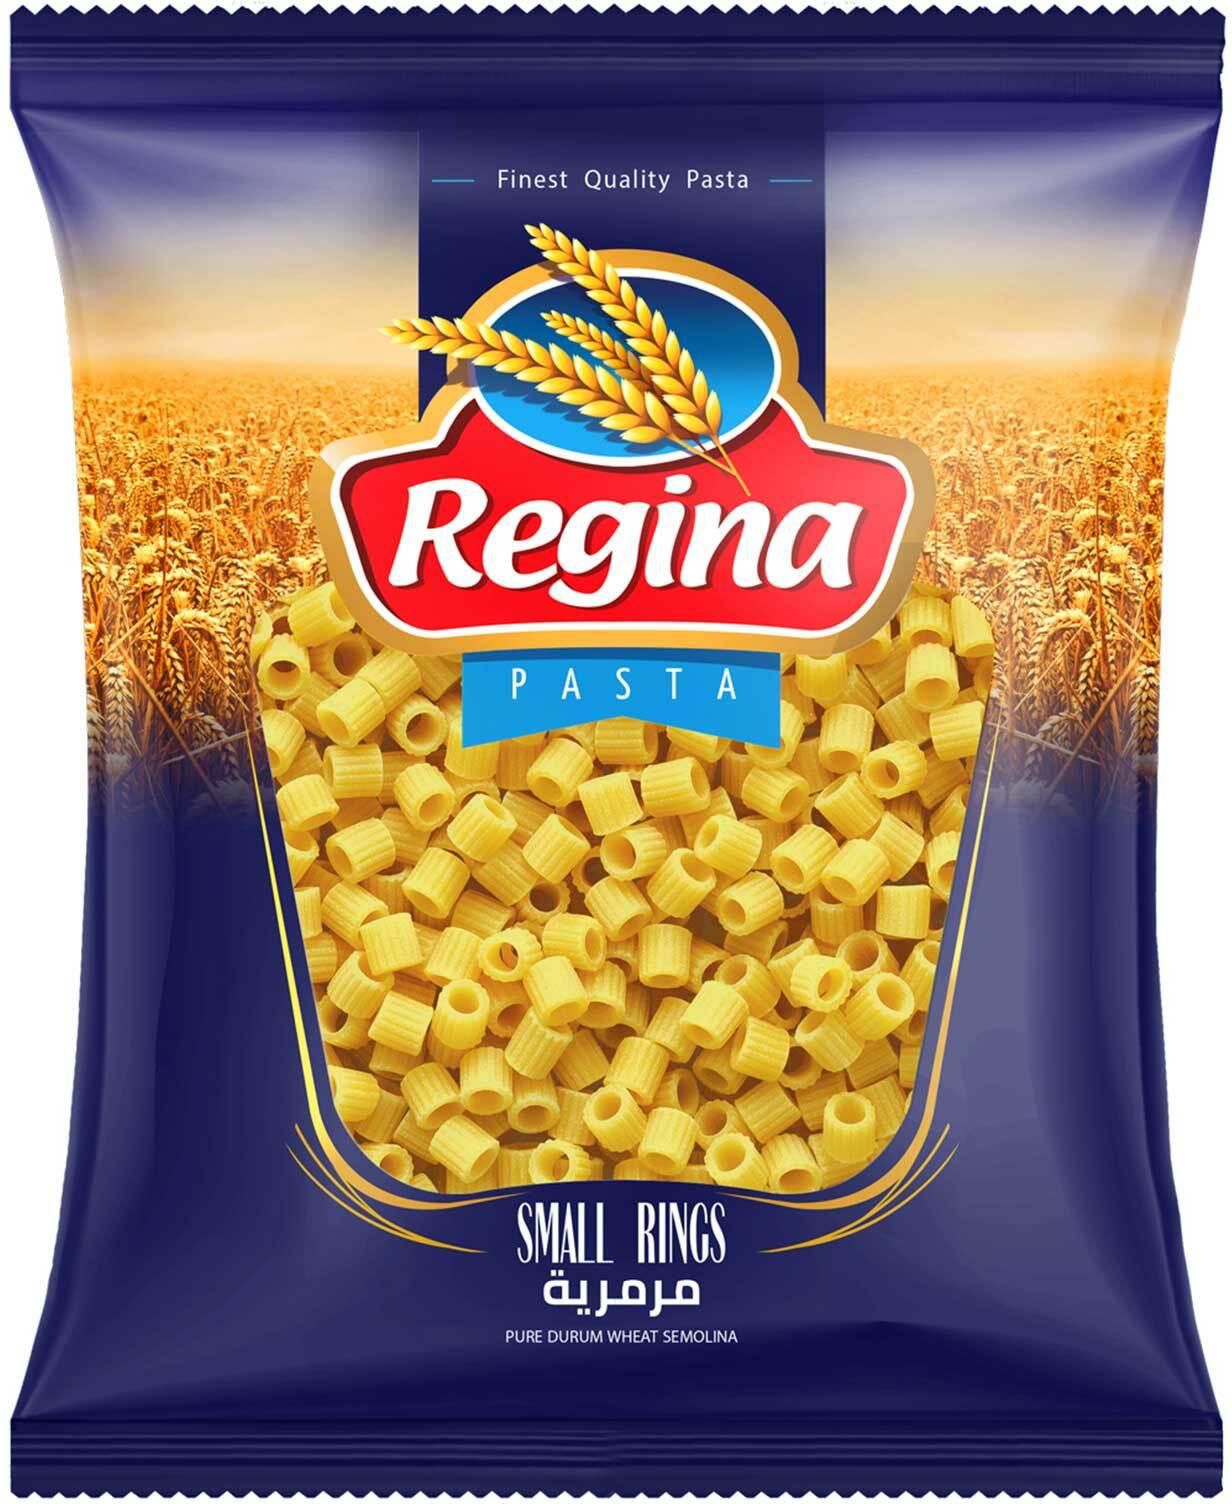 Regina Pasta Small Rings - 1 kg